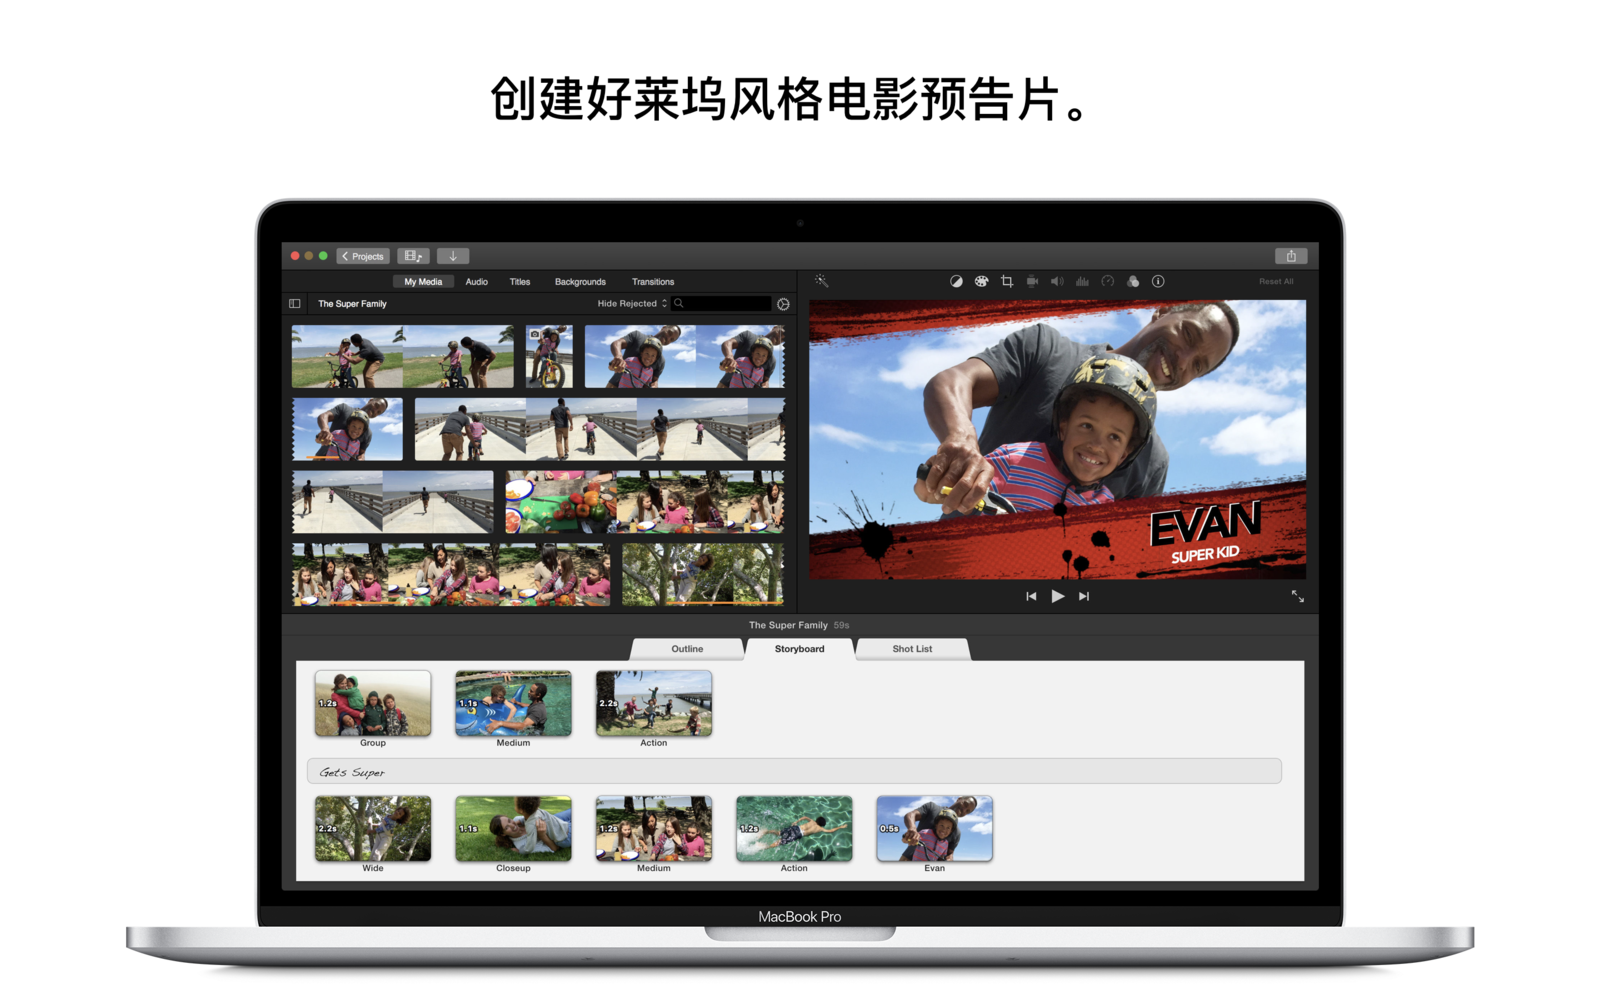 iMovie 10.1.10 视频剪辑软件